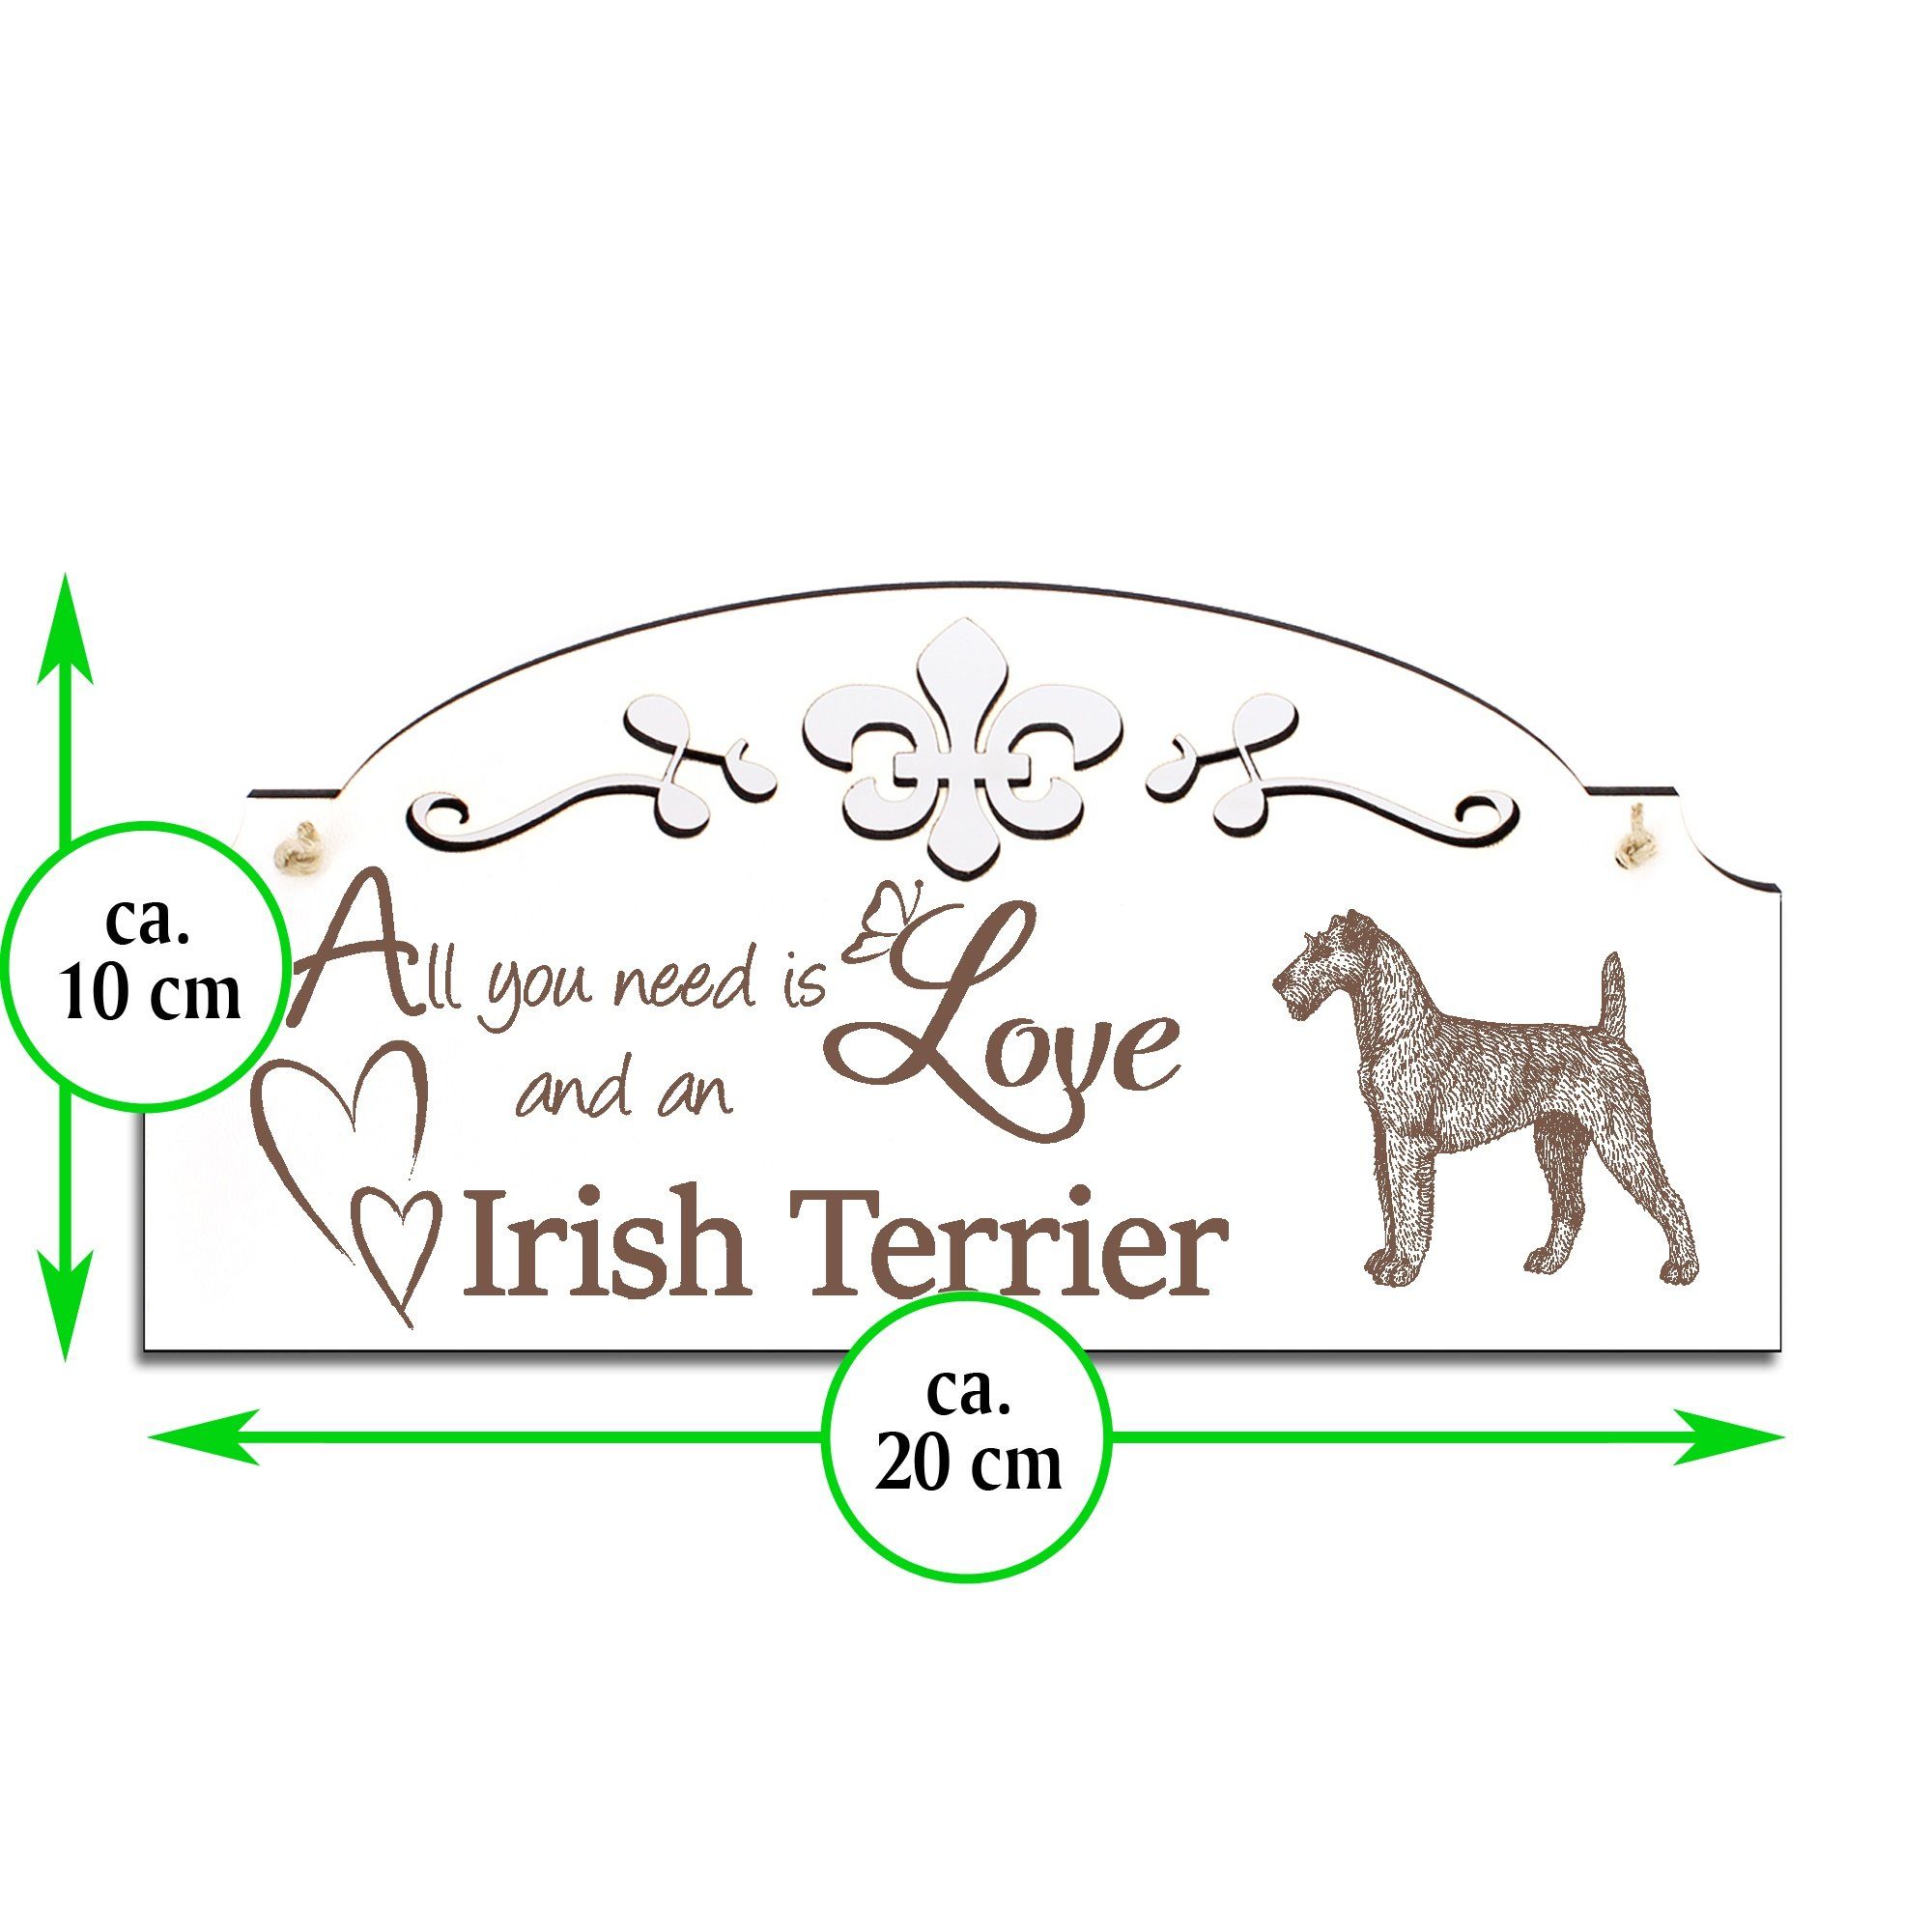 Love Deko need you Dekolando Hängedekoration is Terrier 20x10cm All Irish